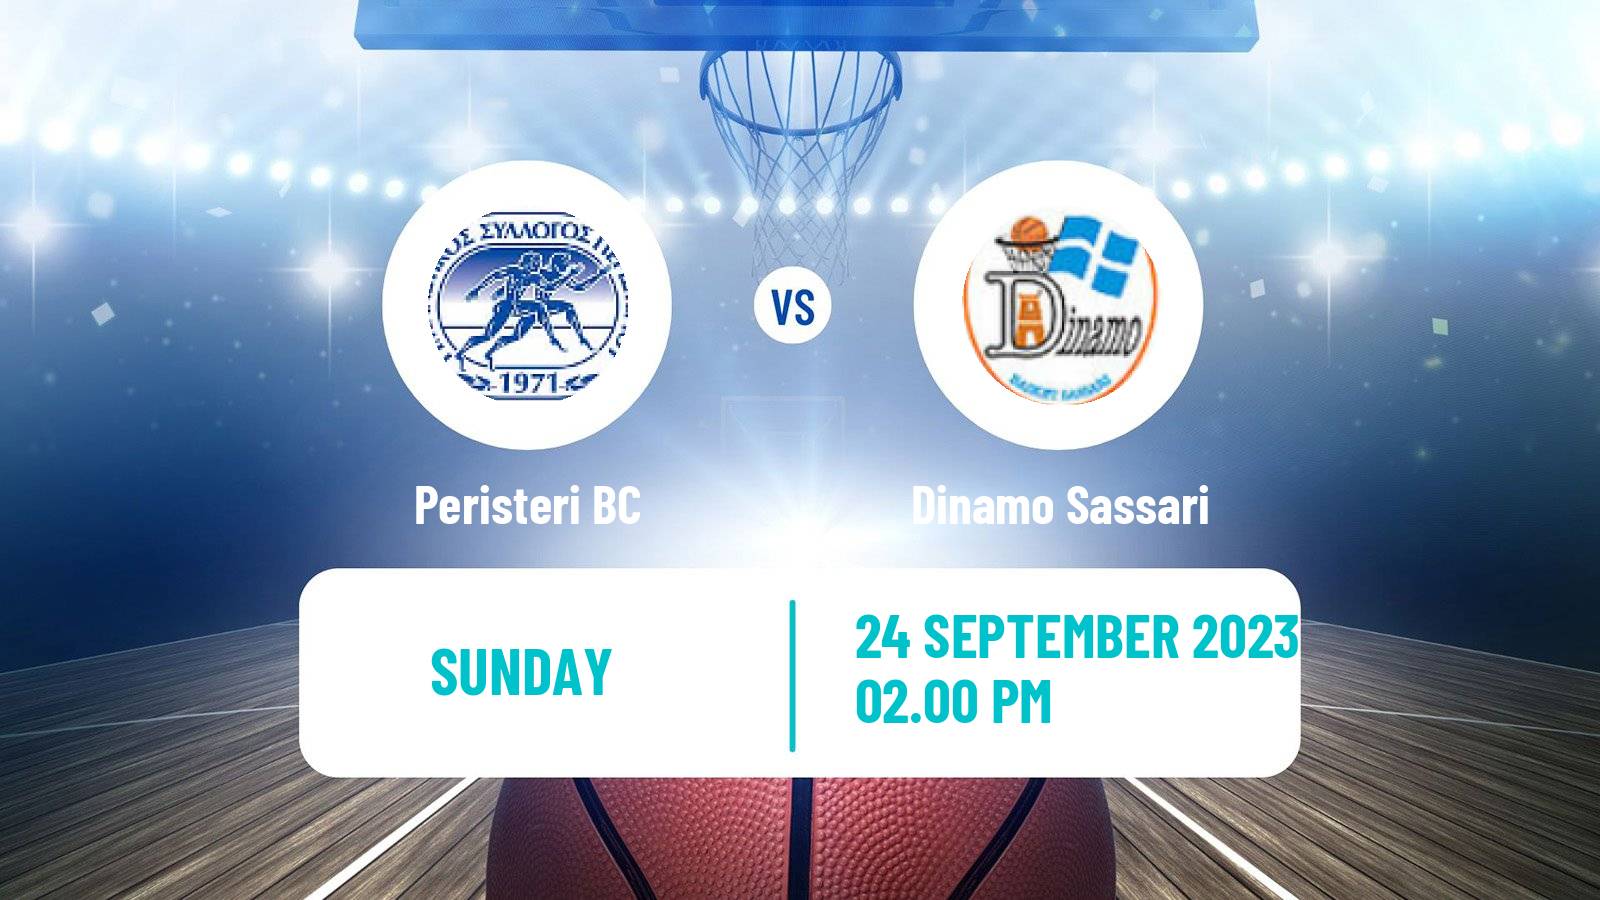 Basketball Club Friendly Basketball Peristeri BC - Dinamo Sassari